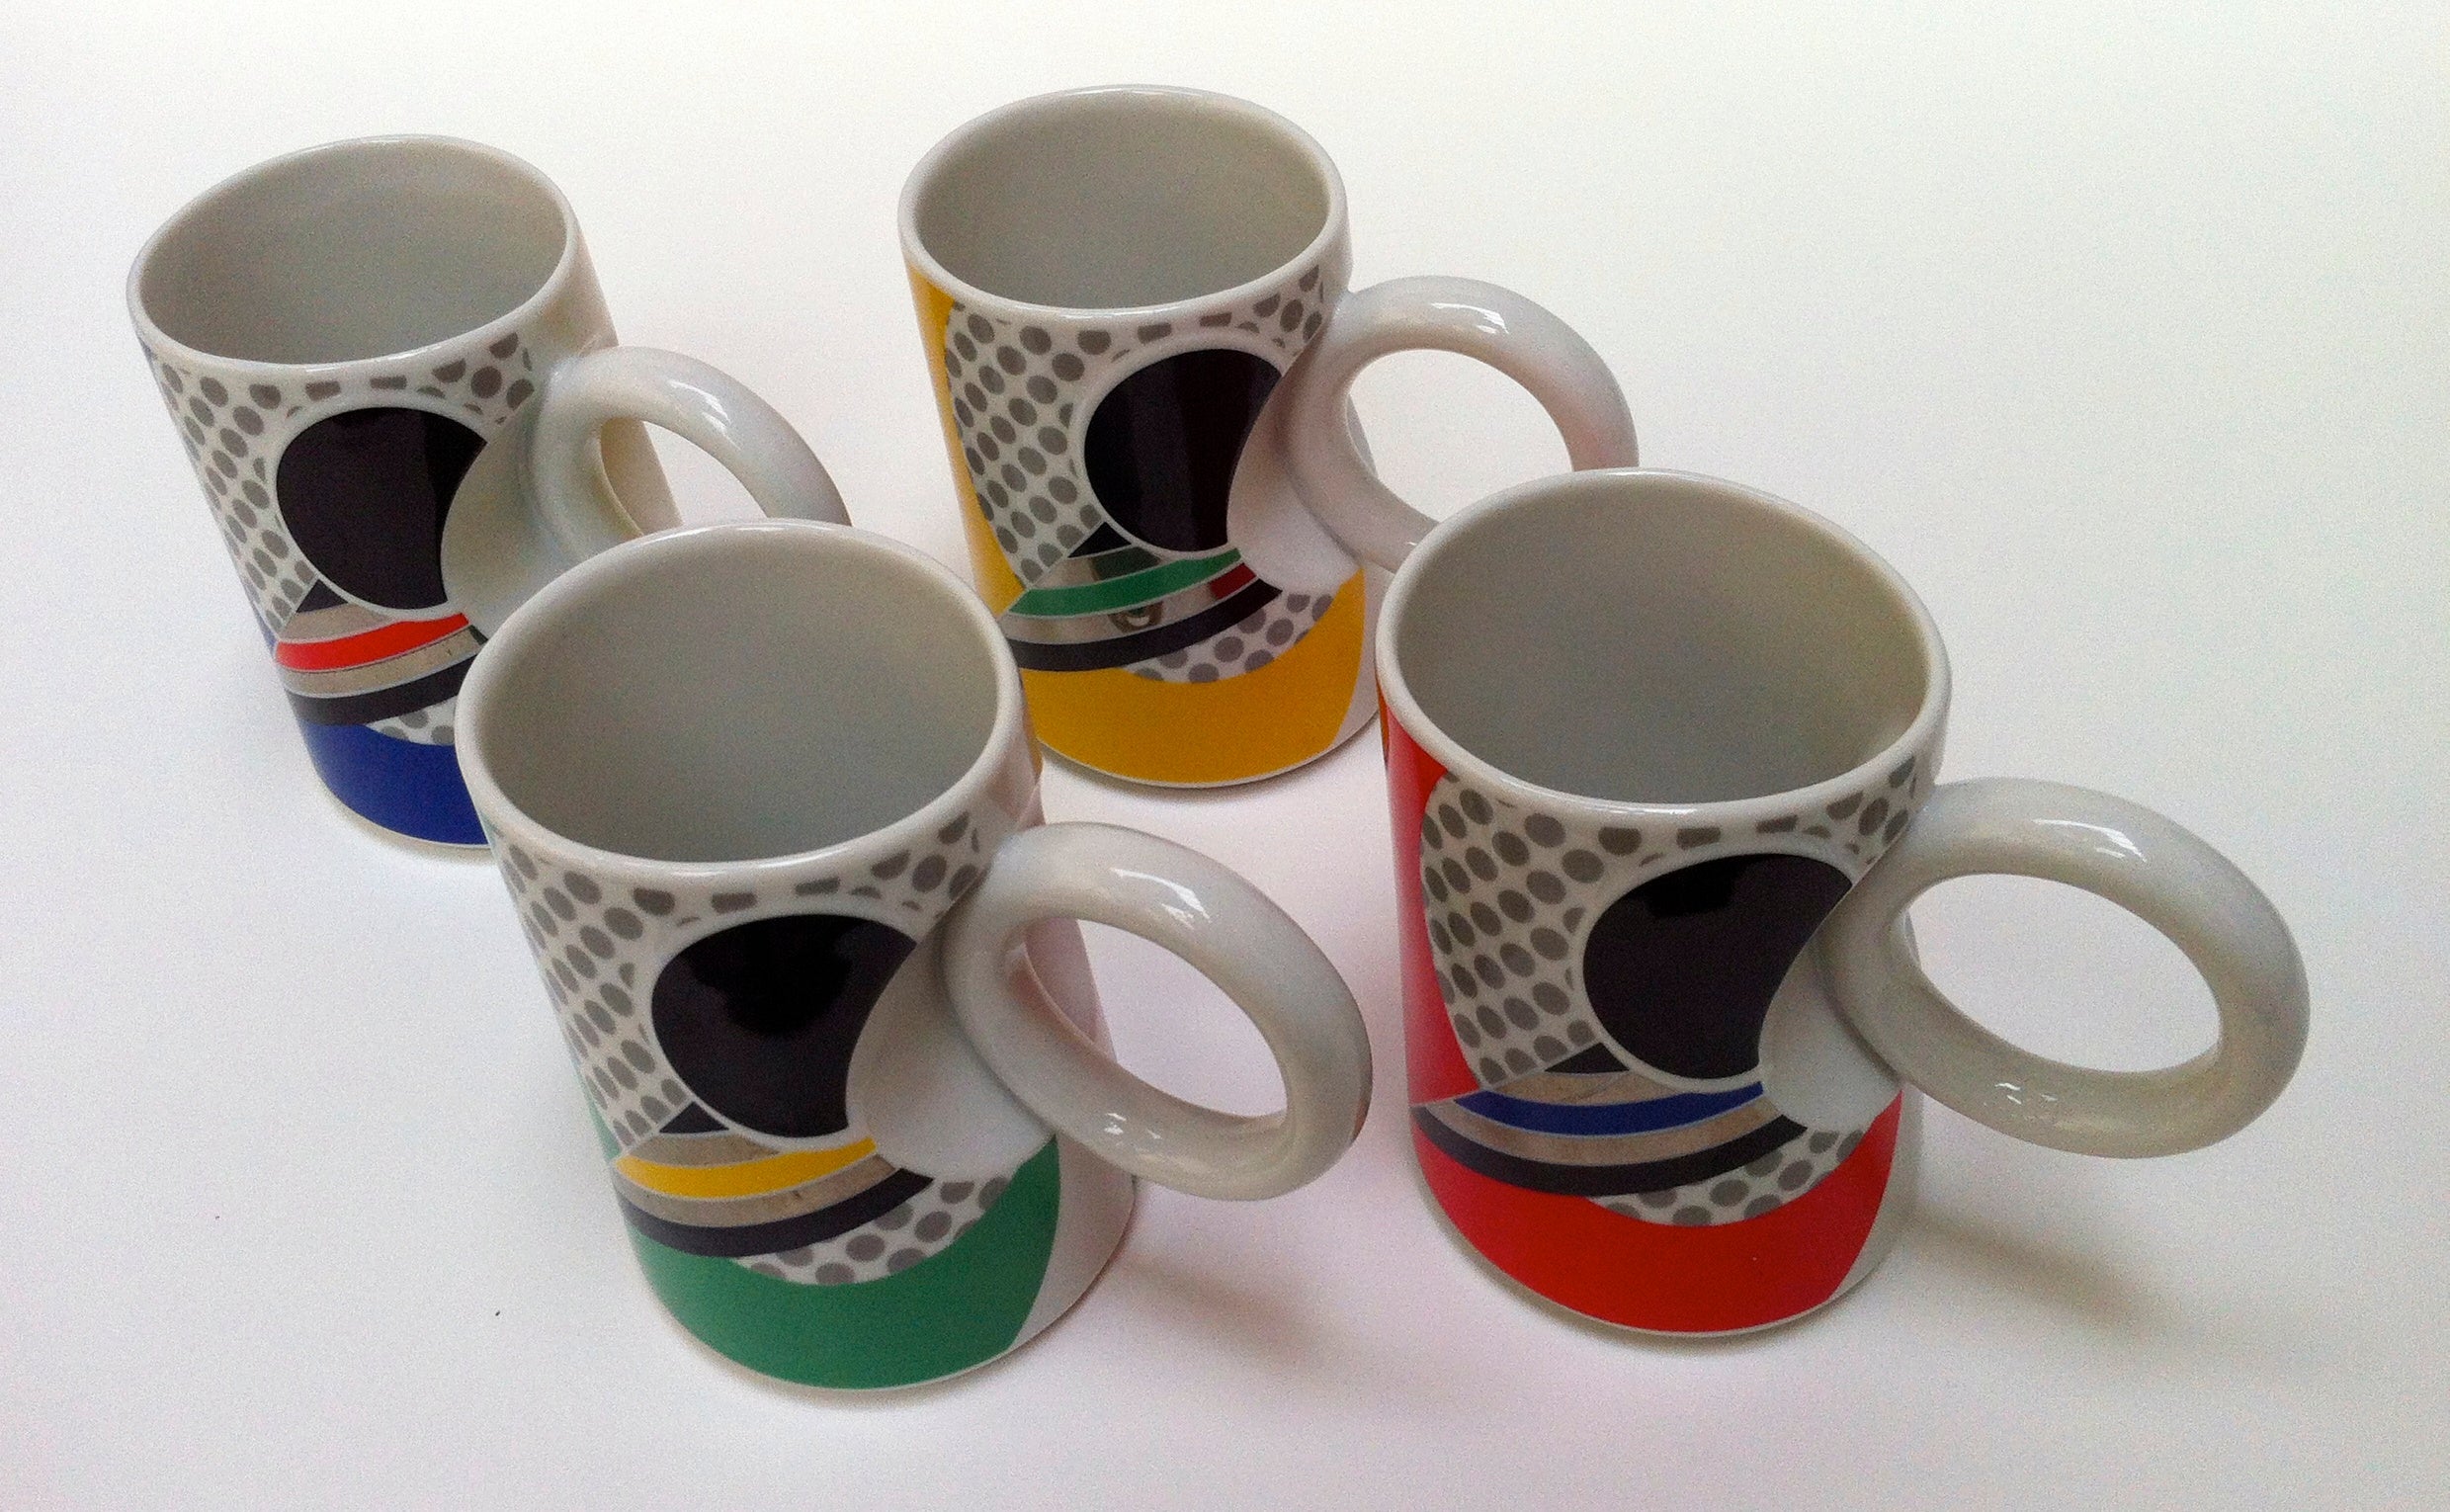 Coffe mugs by Kato Kogei, Fujimori collection "Fascination"